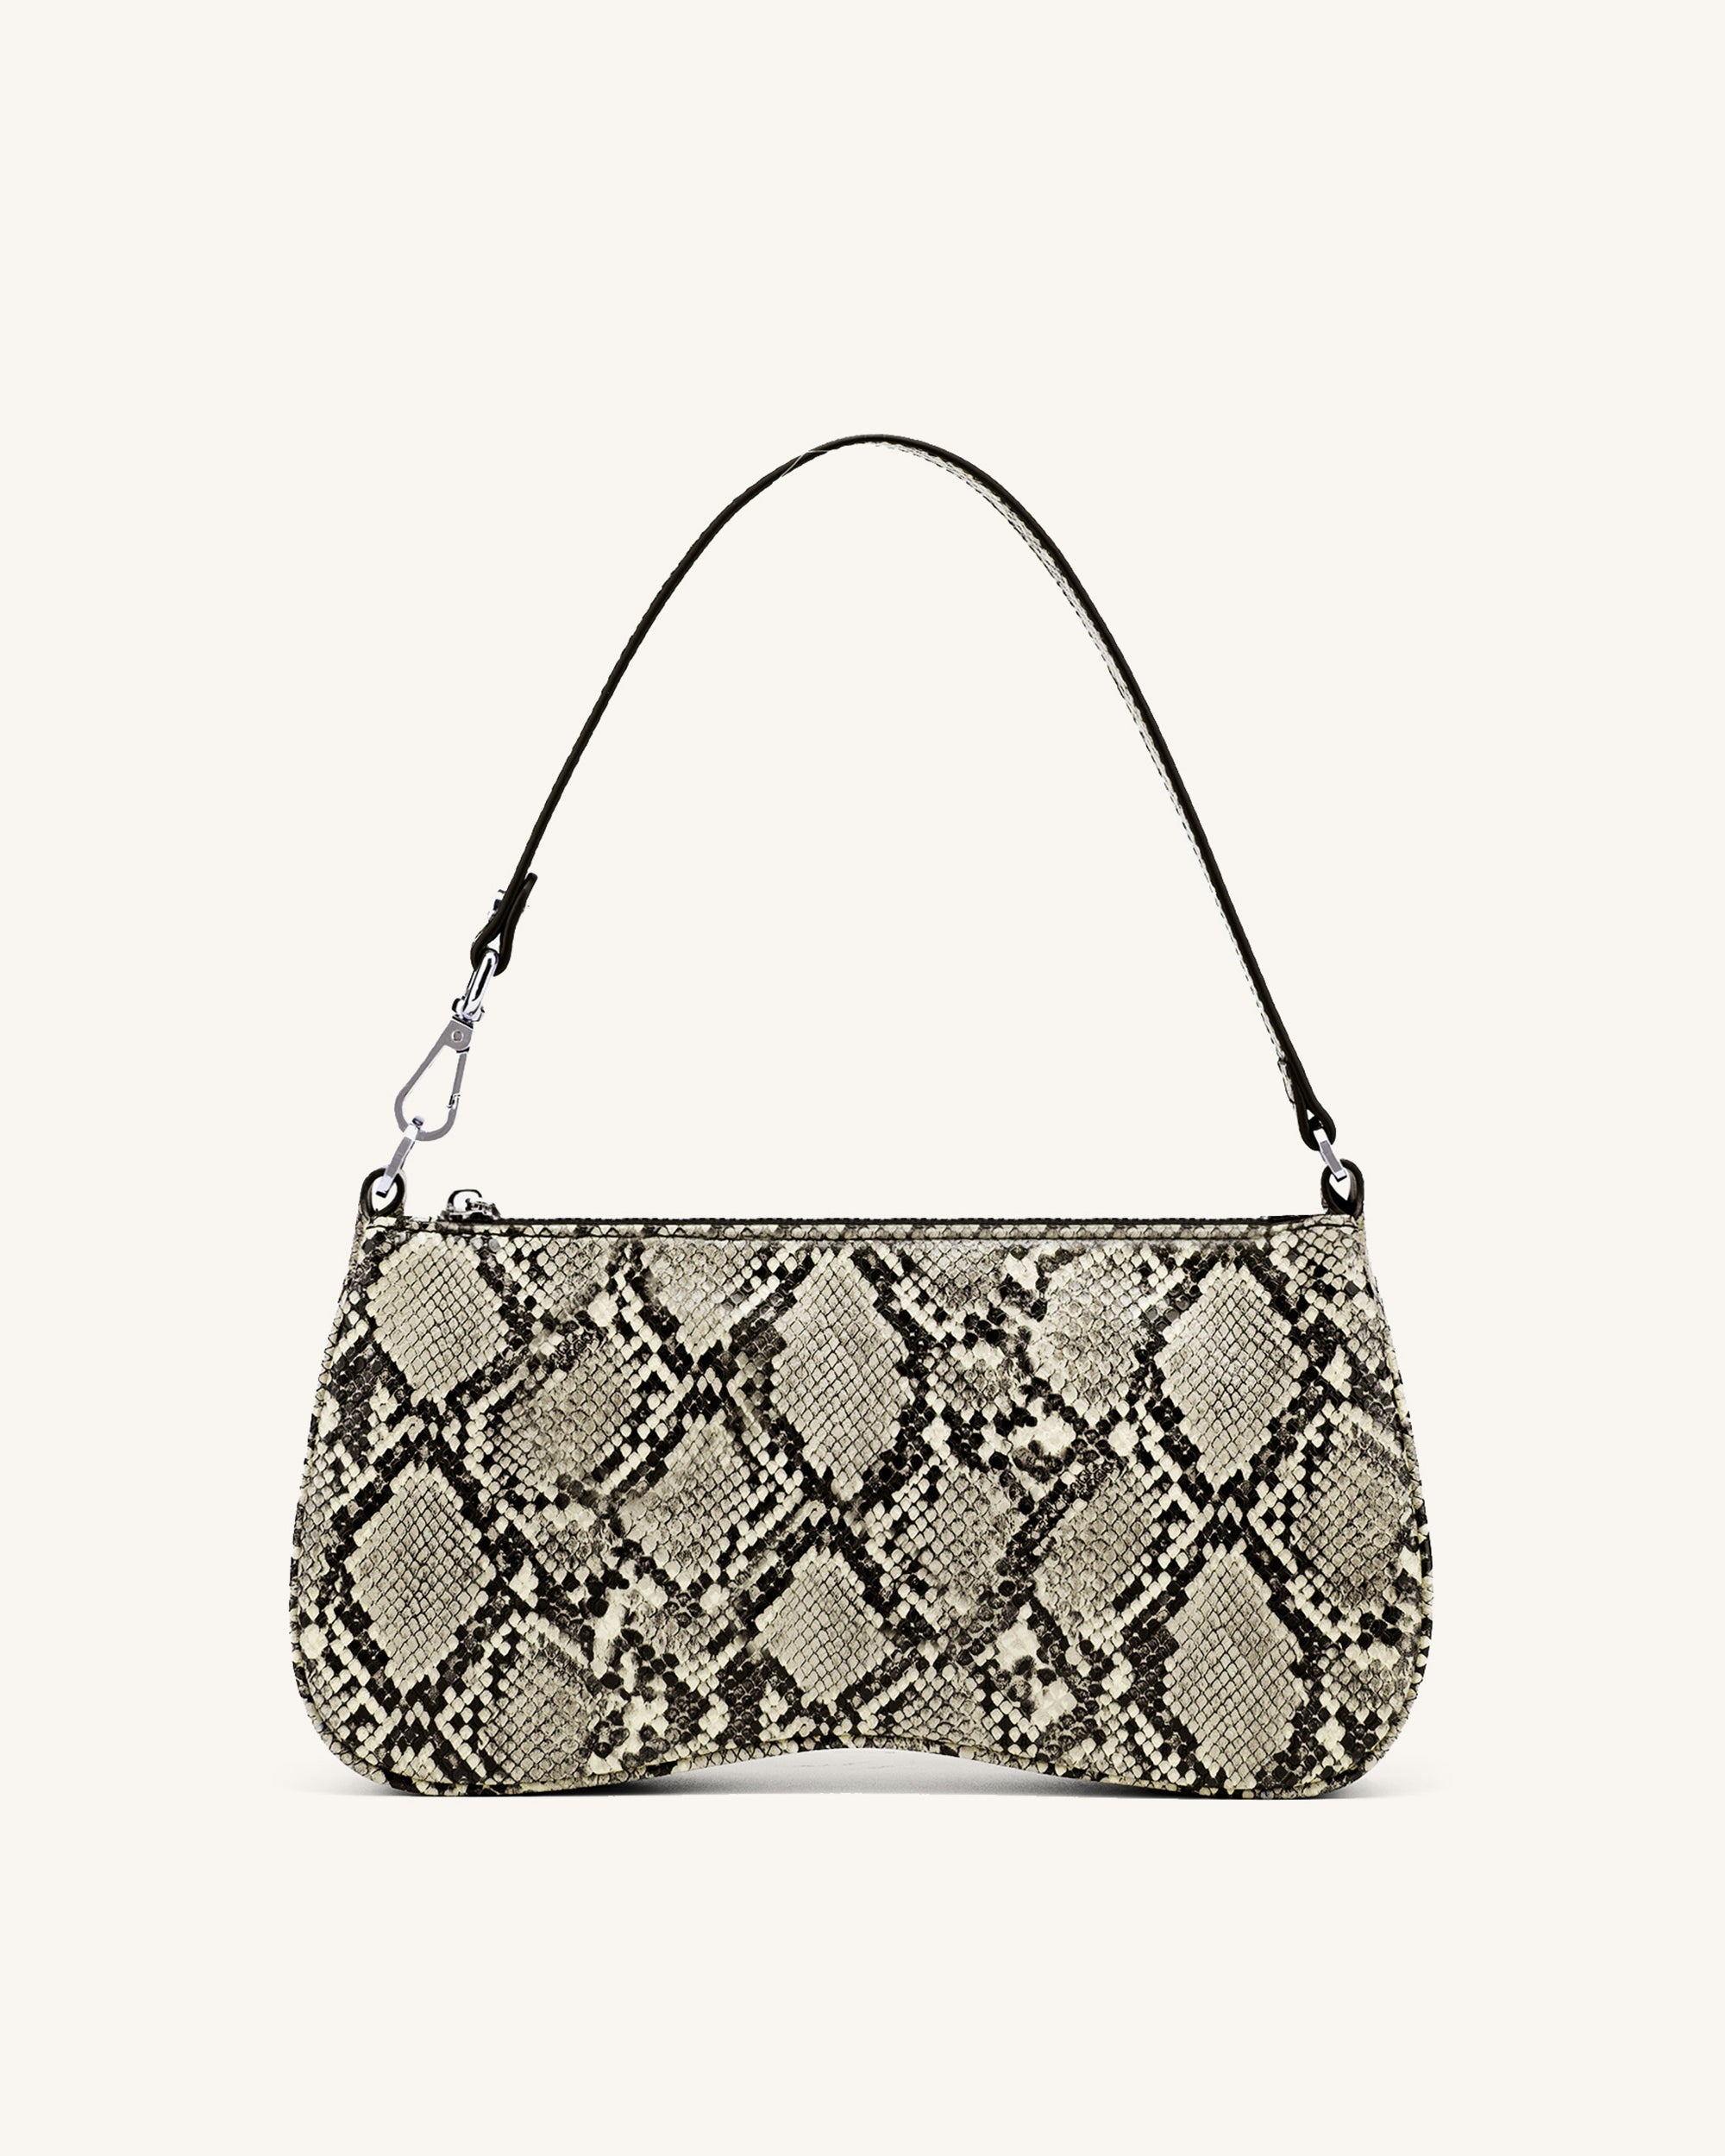 Eva Shoulder Bag - Natural Snake Embossed - Fashion Women Vegan Bag Online Shopping - JW Pei